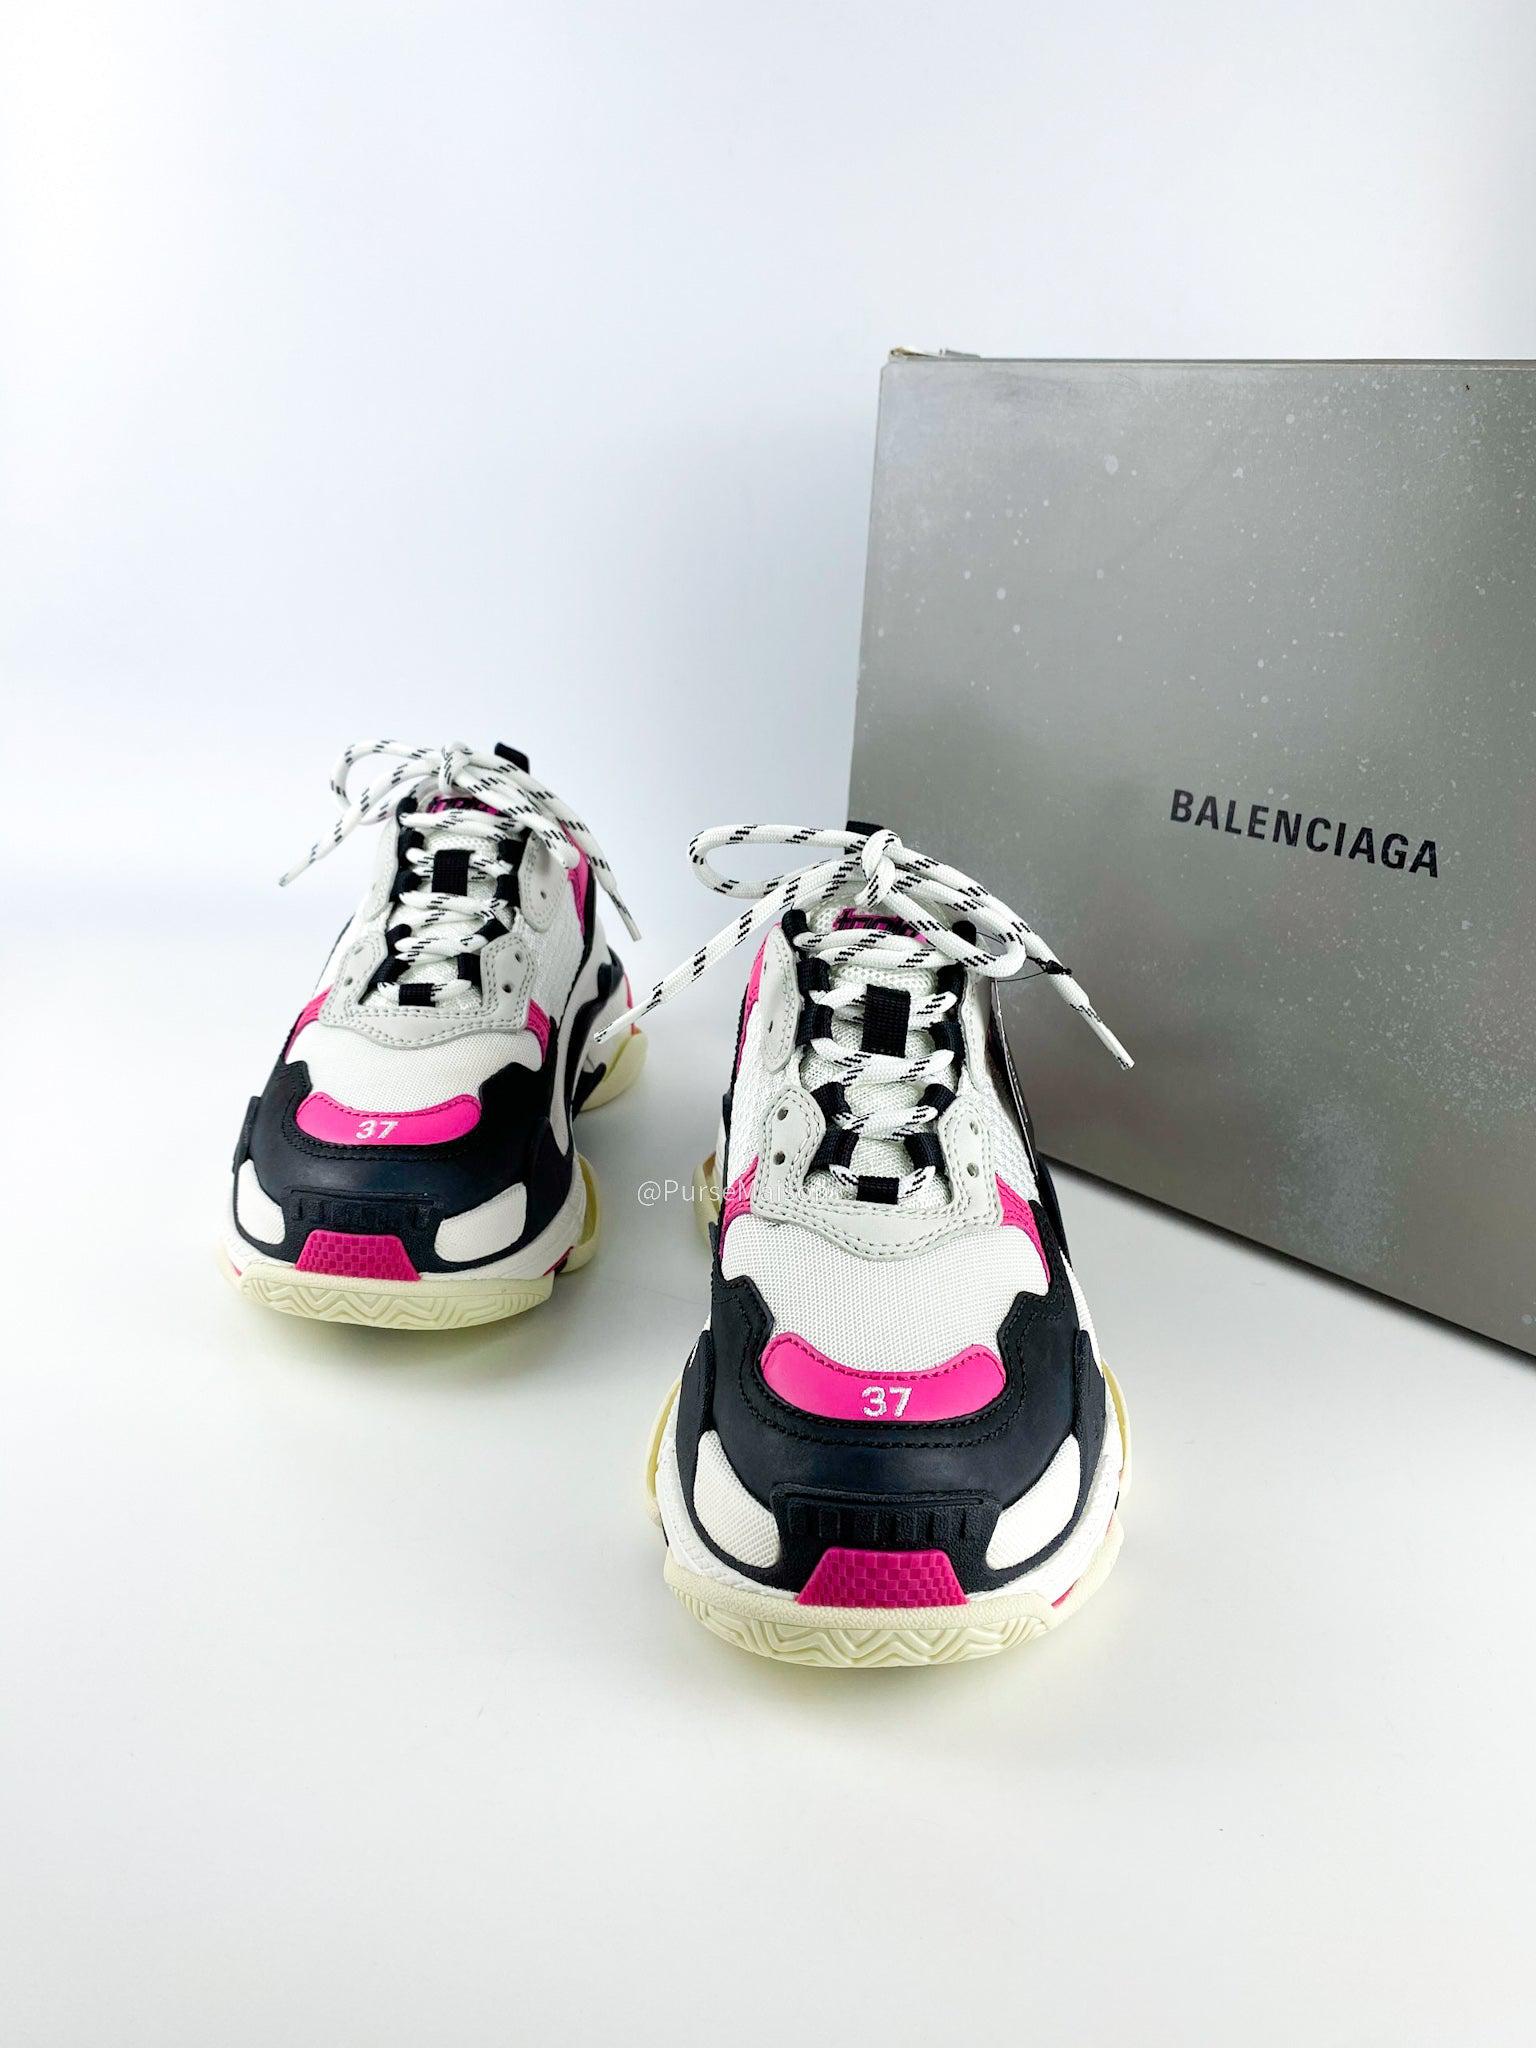 Balenciaga Women’s Triple S Sneaker in Multicolor Size 37 EU (25cm)